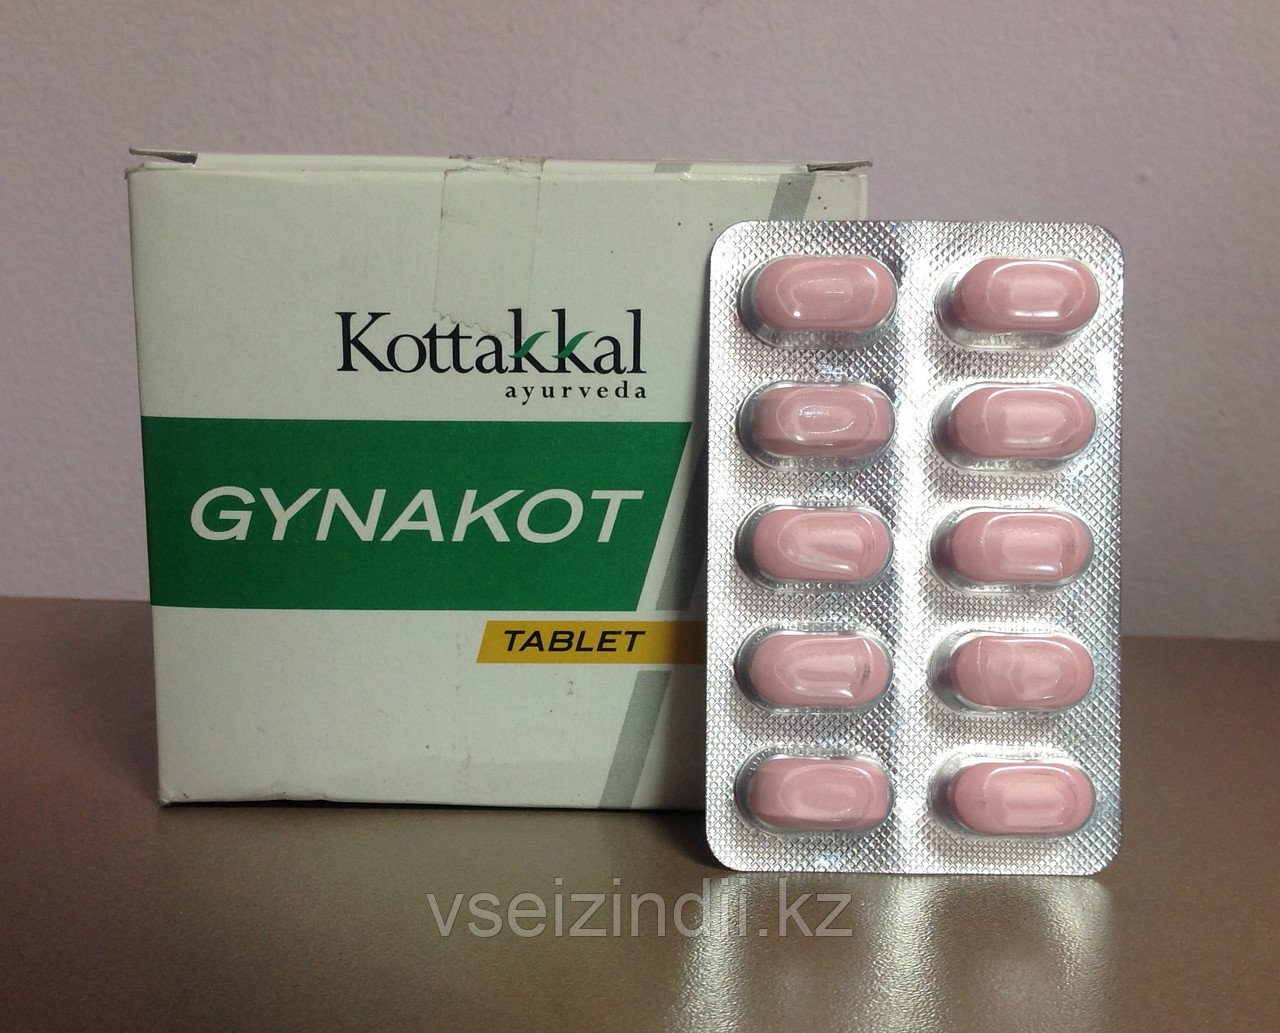 Гунакот, Коттакал / Gynakot, Kottakal, 10 таблеток